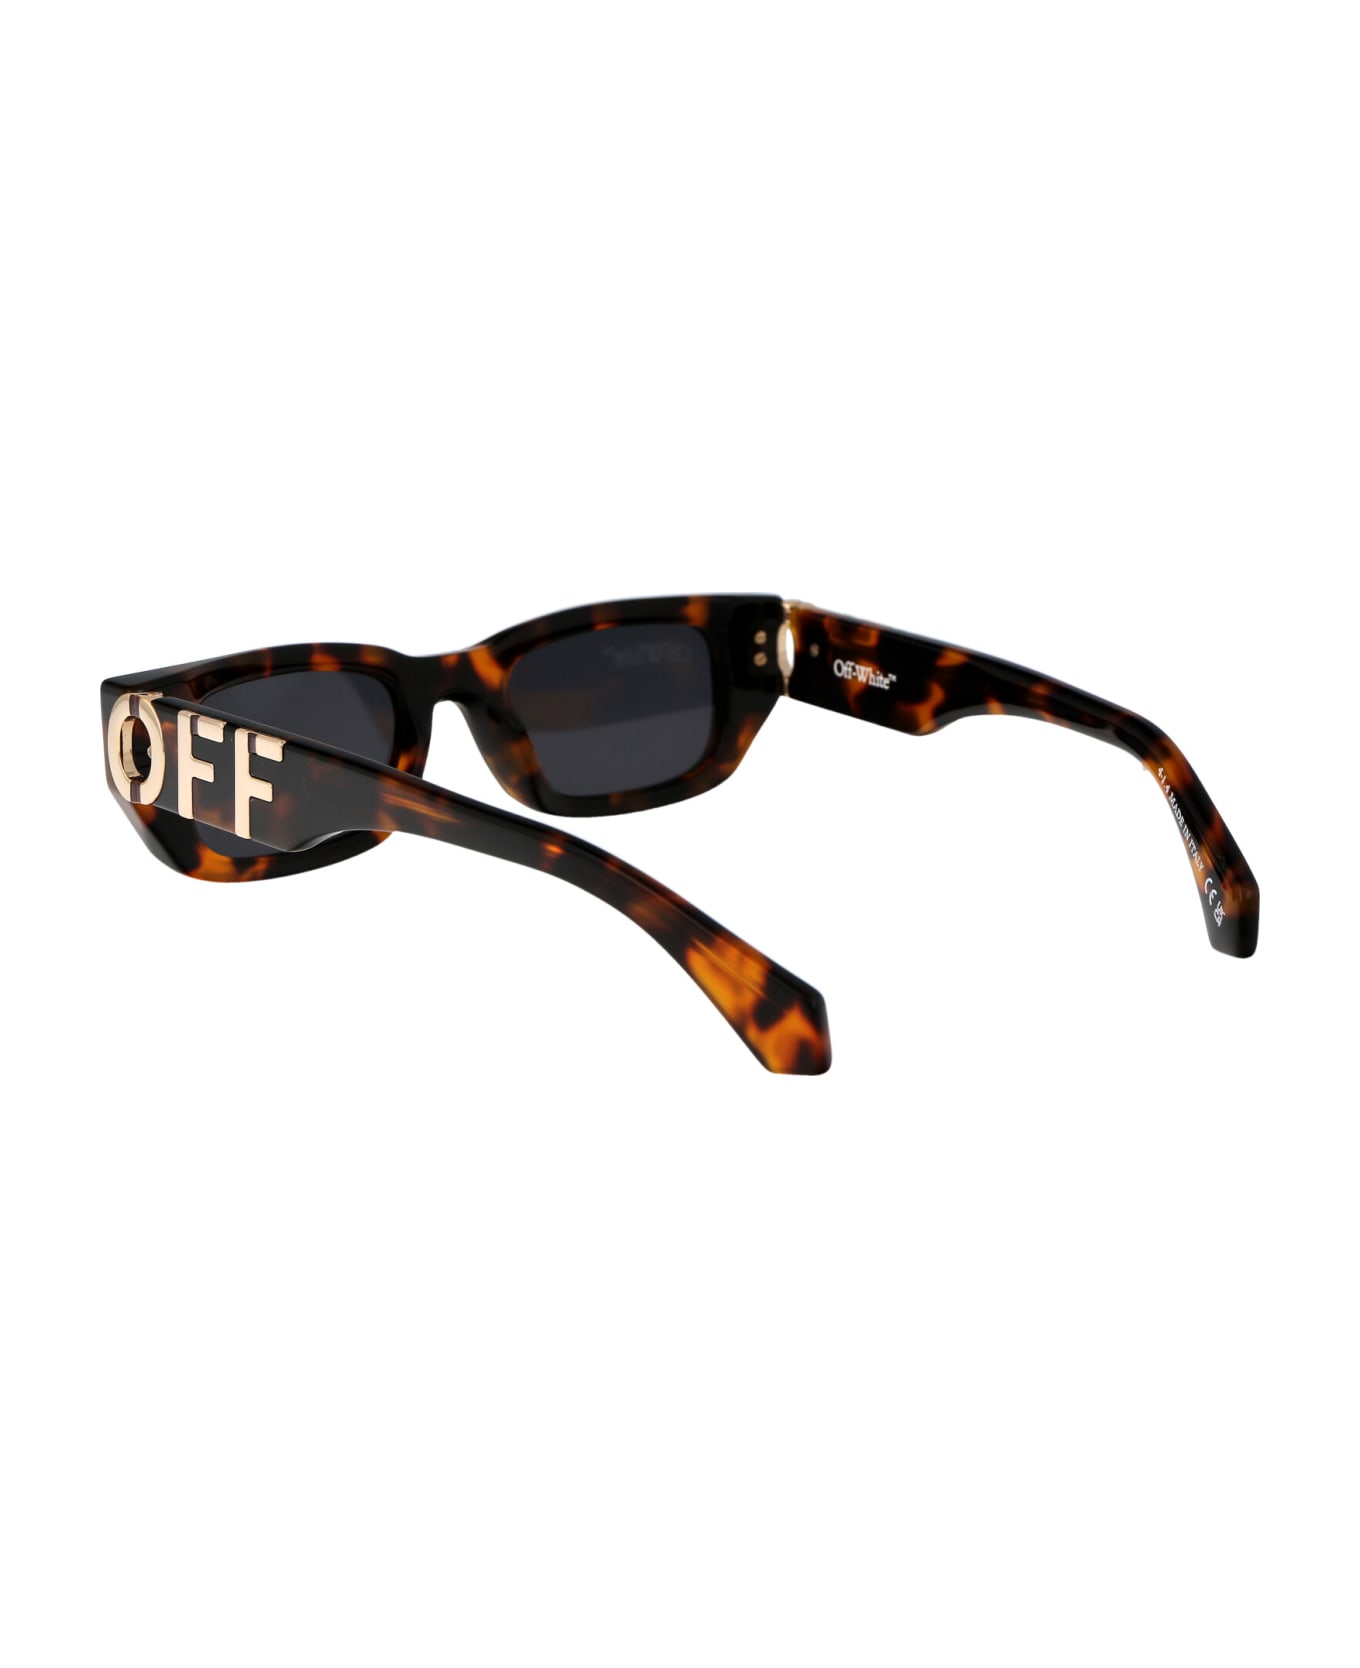 Off-White Fillmore Sunglasses - 6007 HAVANA DARK GREY